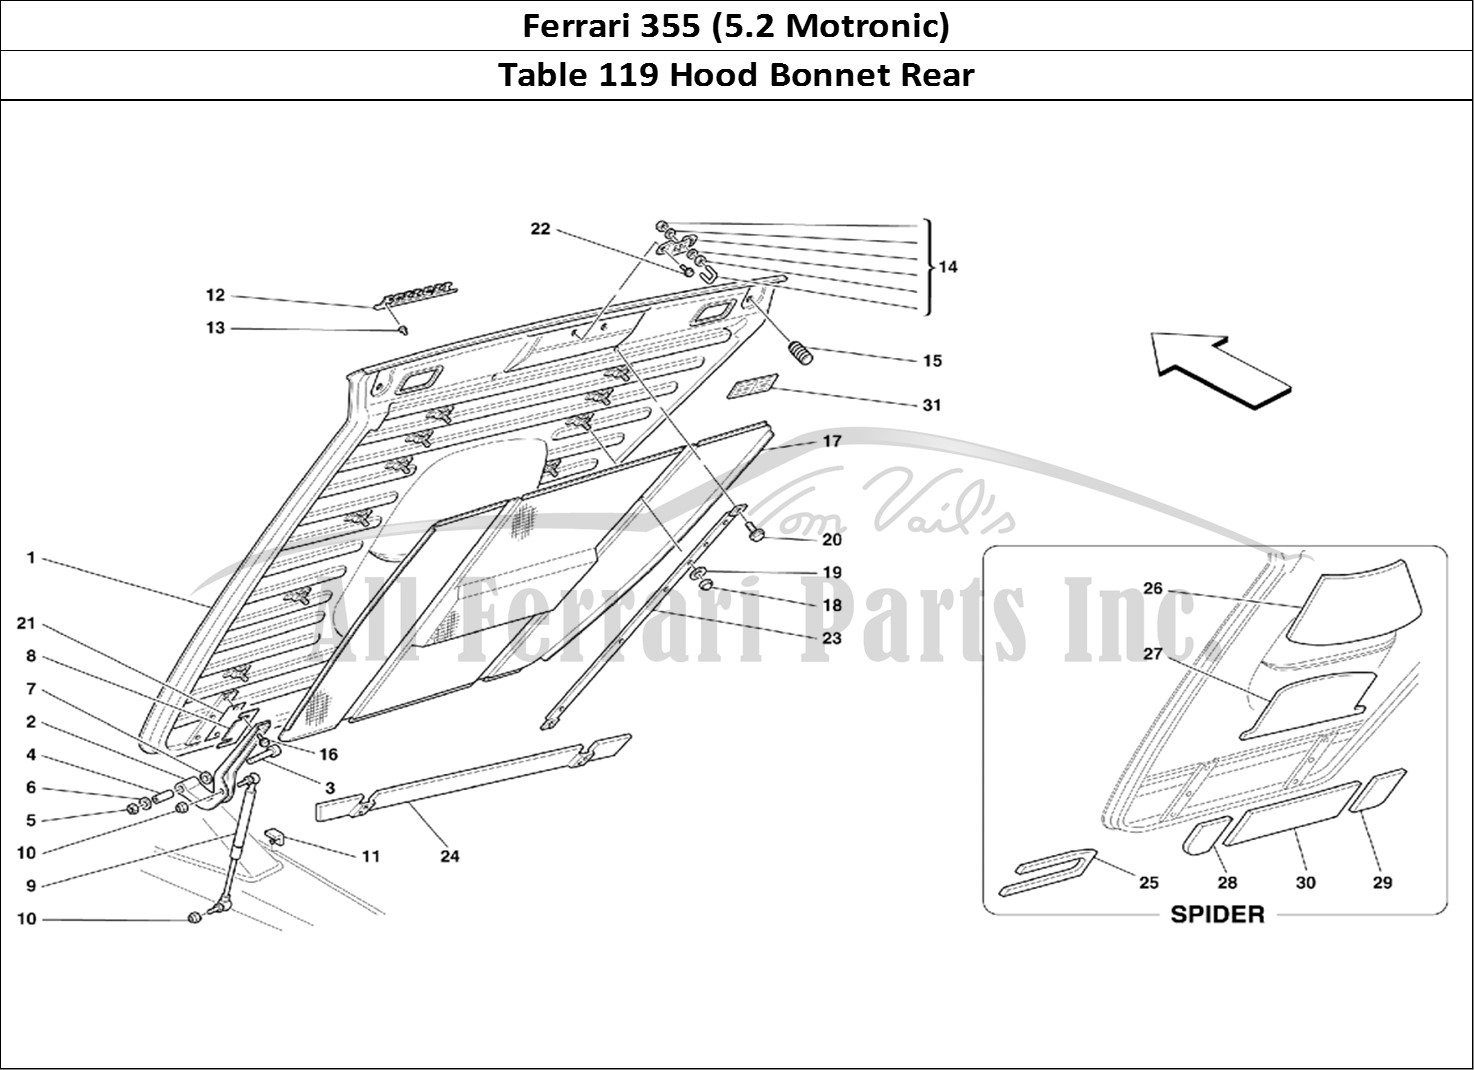 Ferrari Parts Ferrari 355 (5.2 Motronic) Page 119 Rear Hood